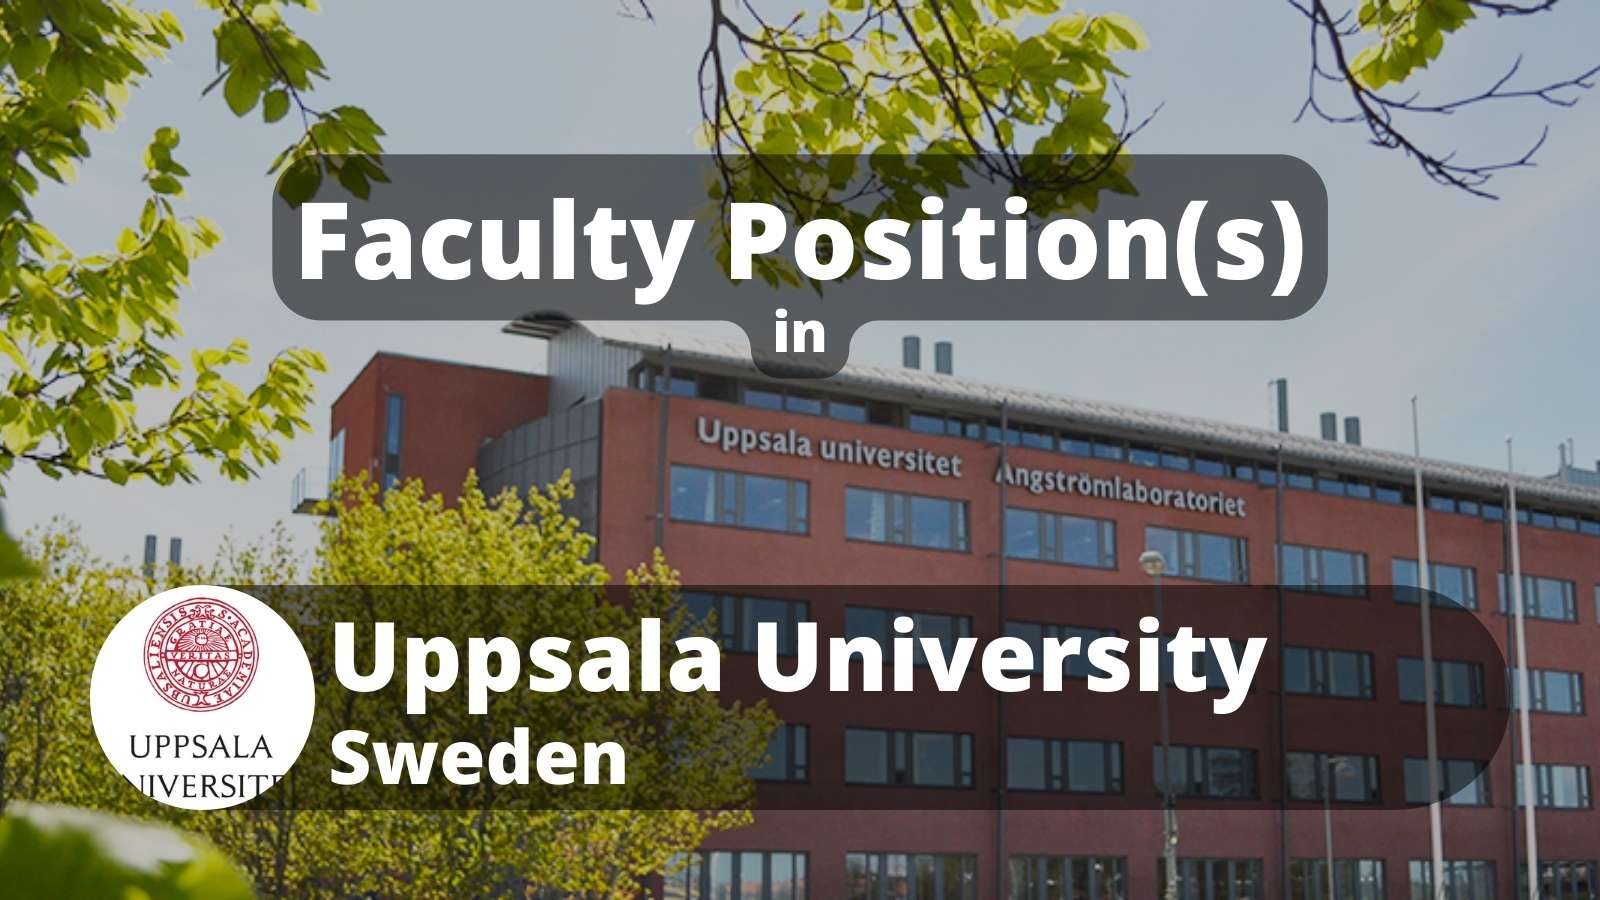 Faculty Positions in Uppsala University Sweden